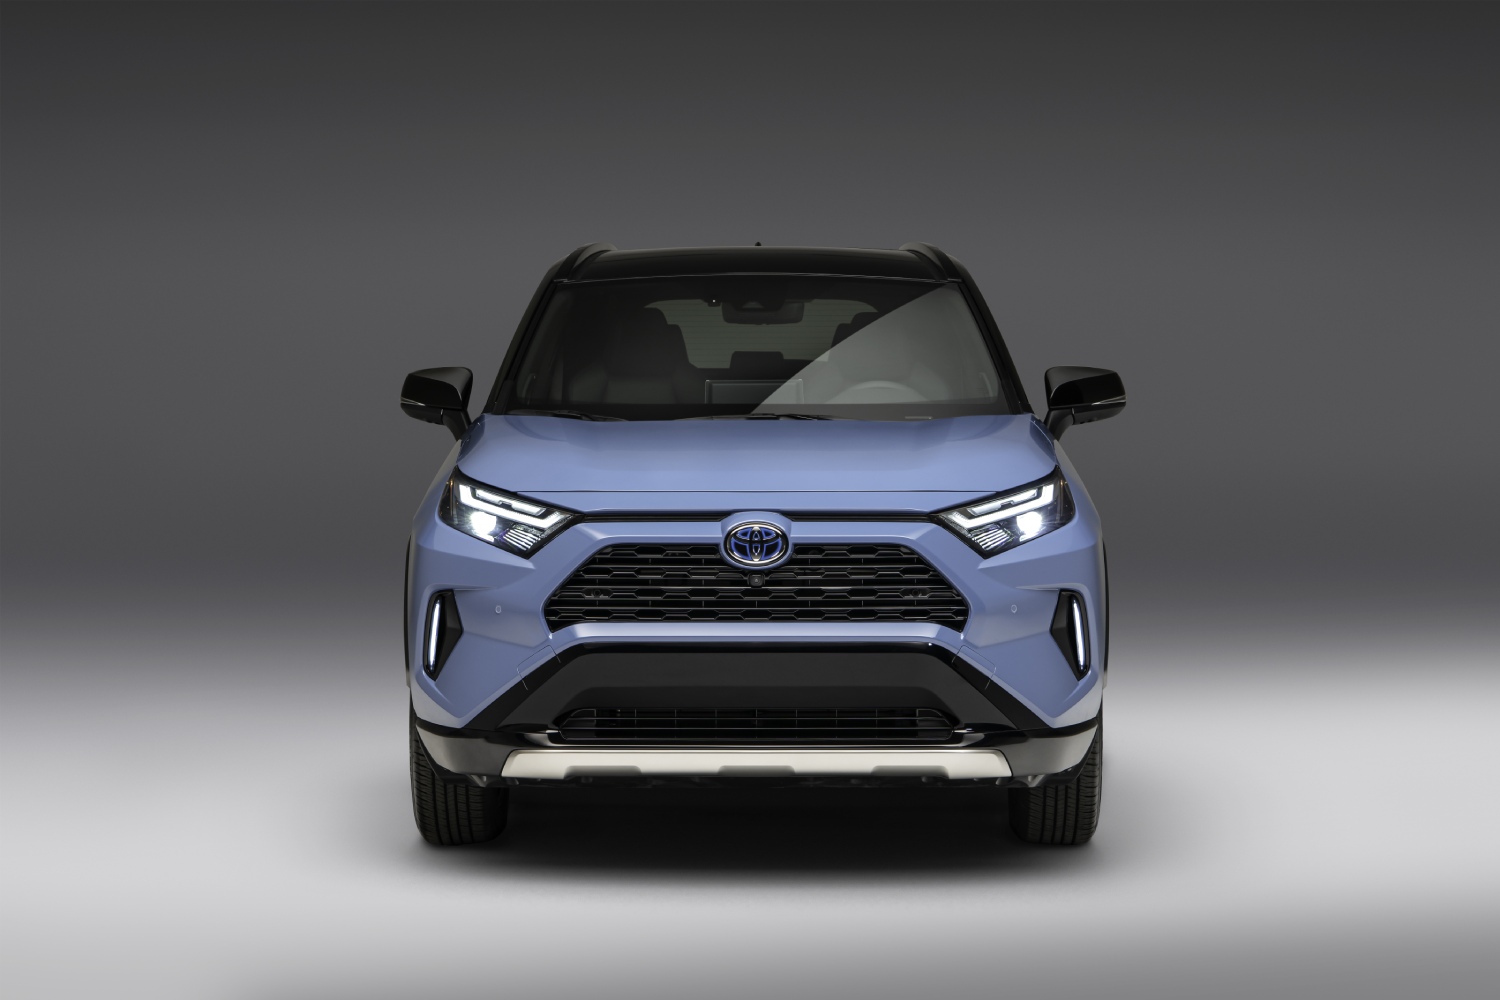 The 2022 Toyota RAV4 adaptive headlights are missing